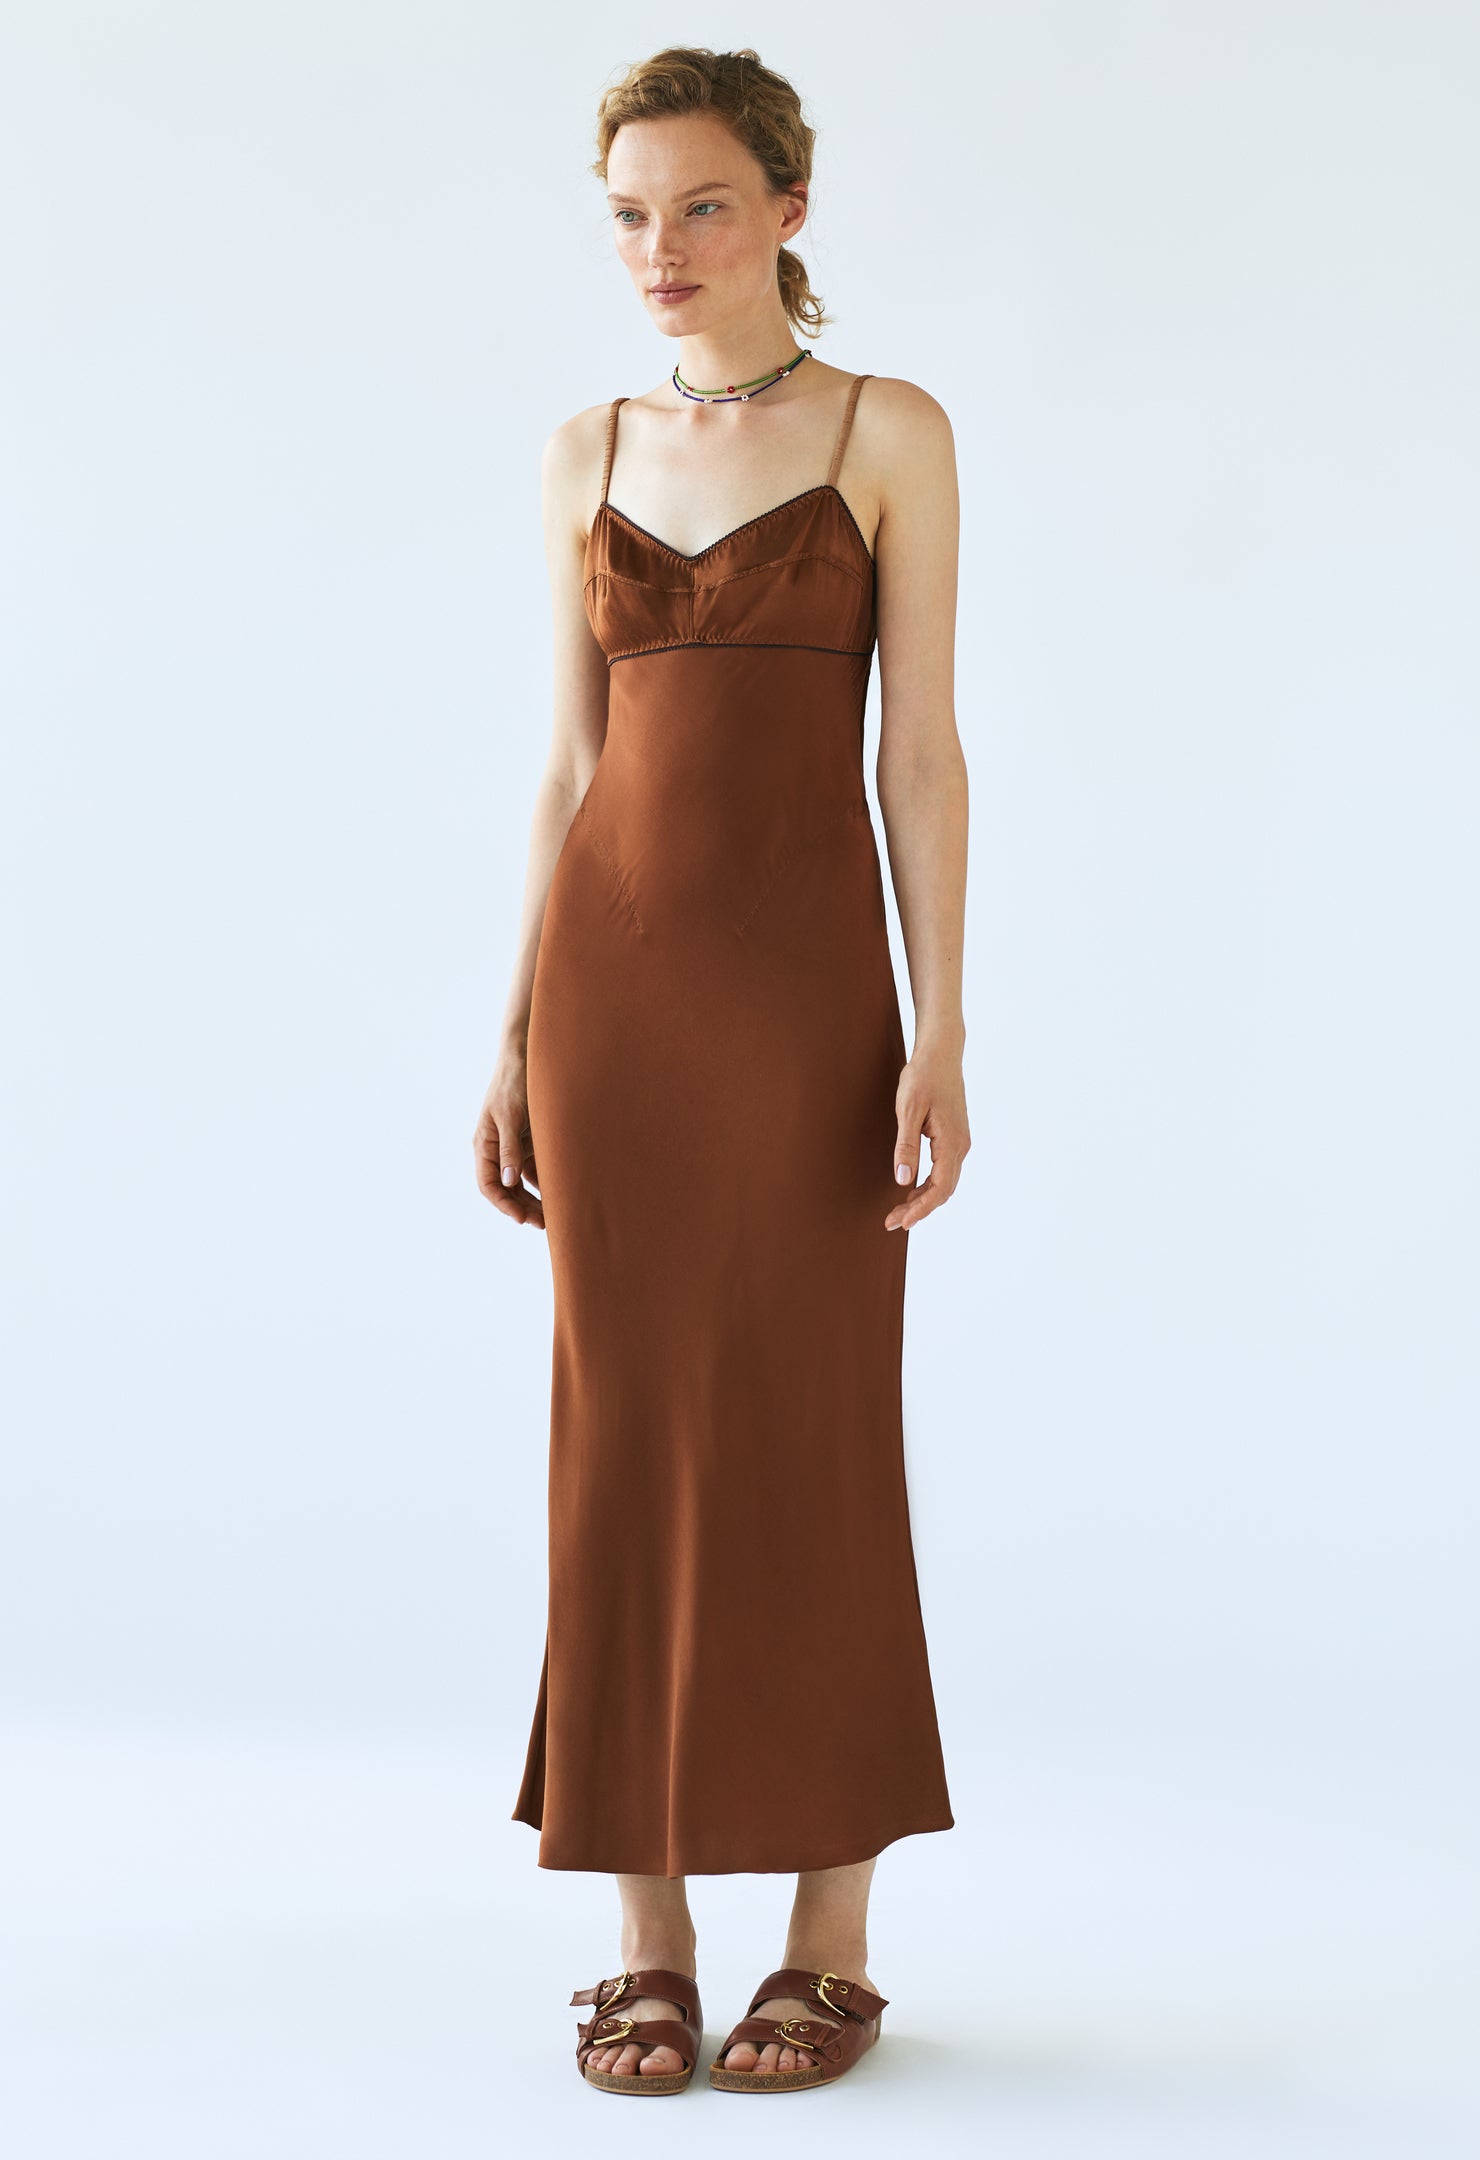 Waterlily dress